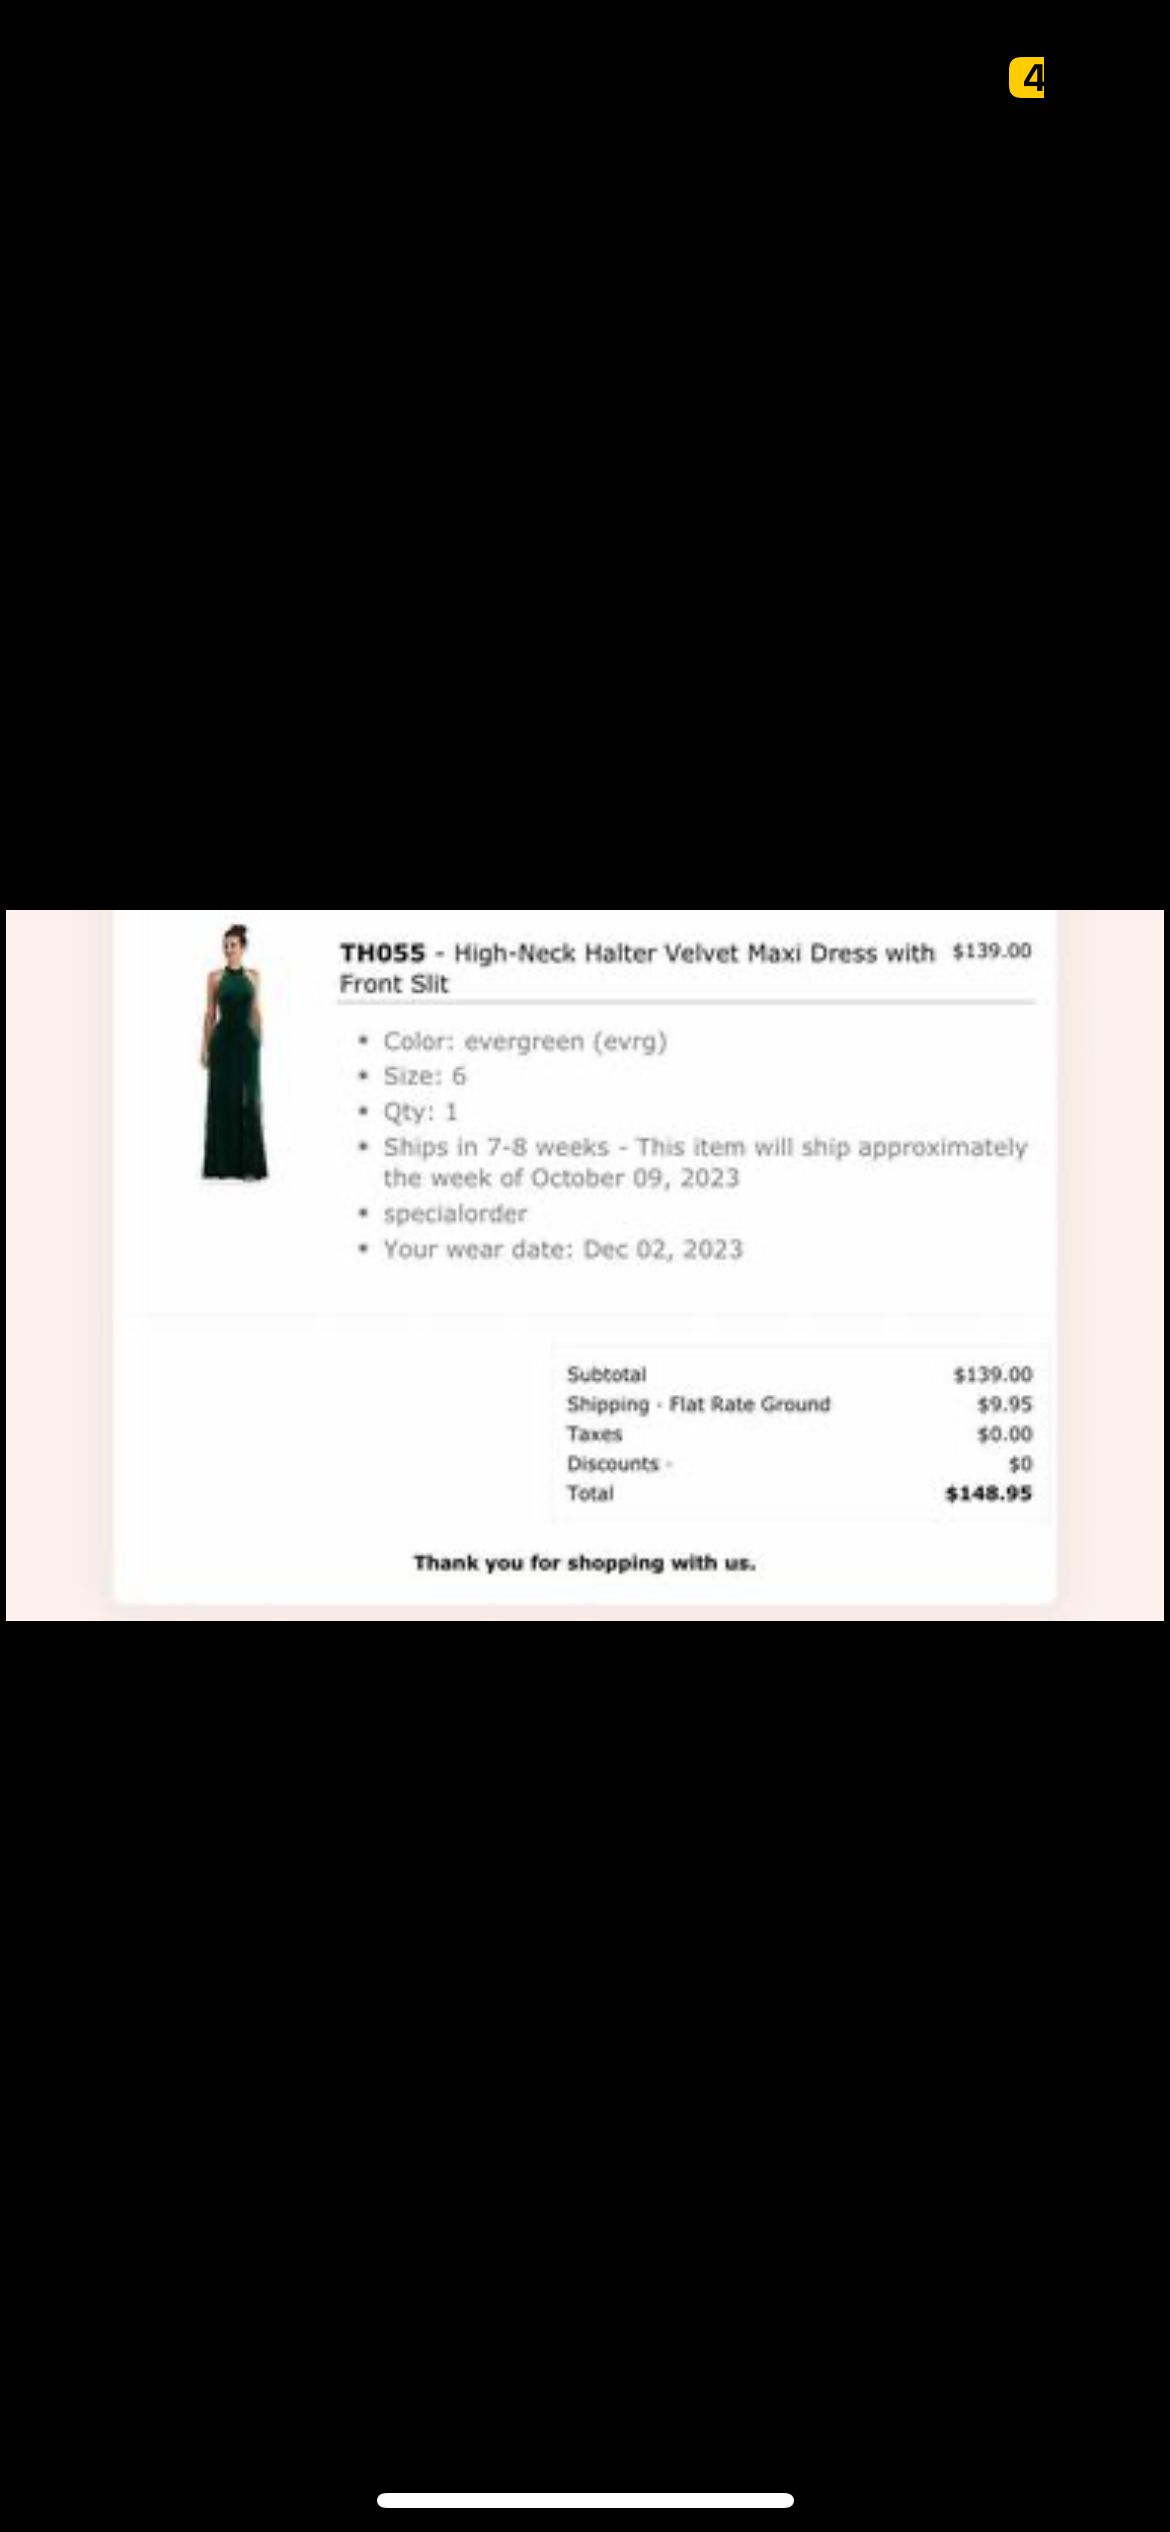 Dessy Size 6 Green Side Slit Dress on Queenly